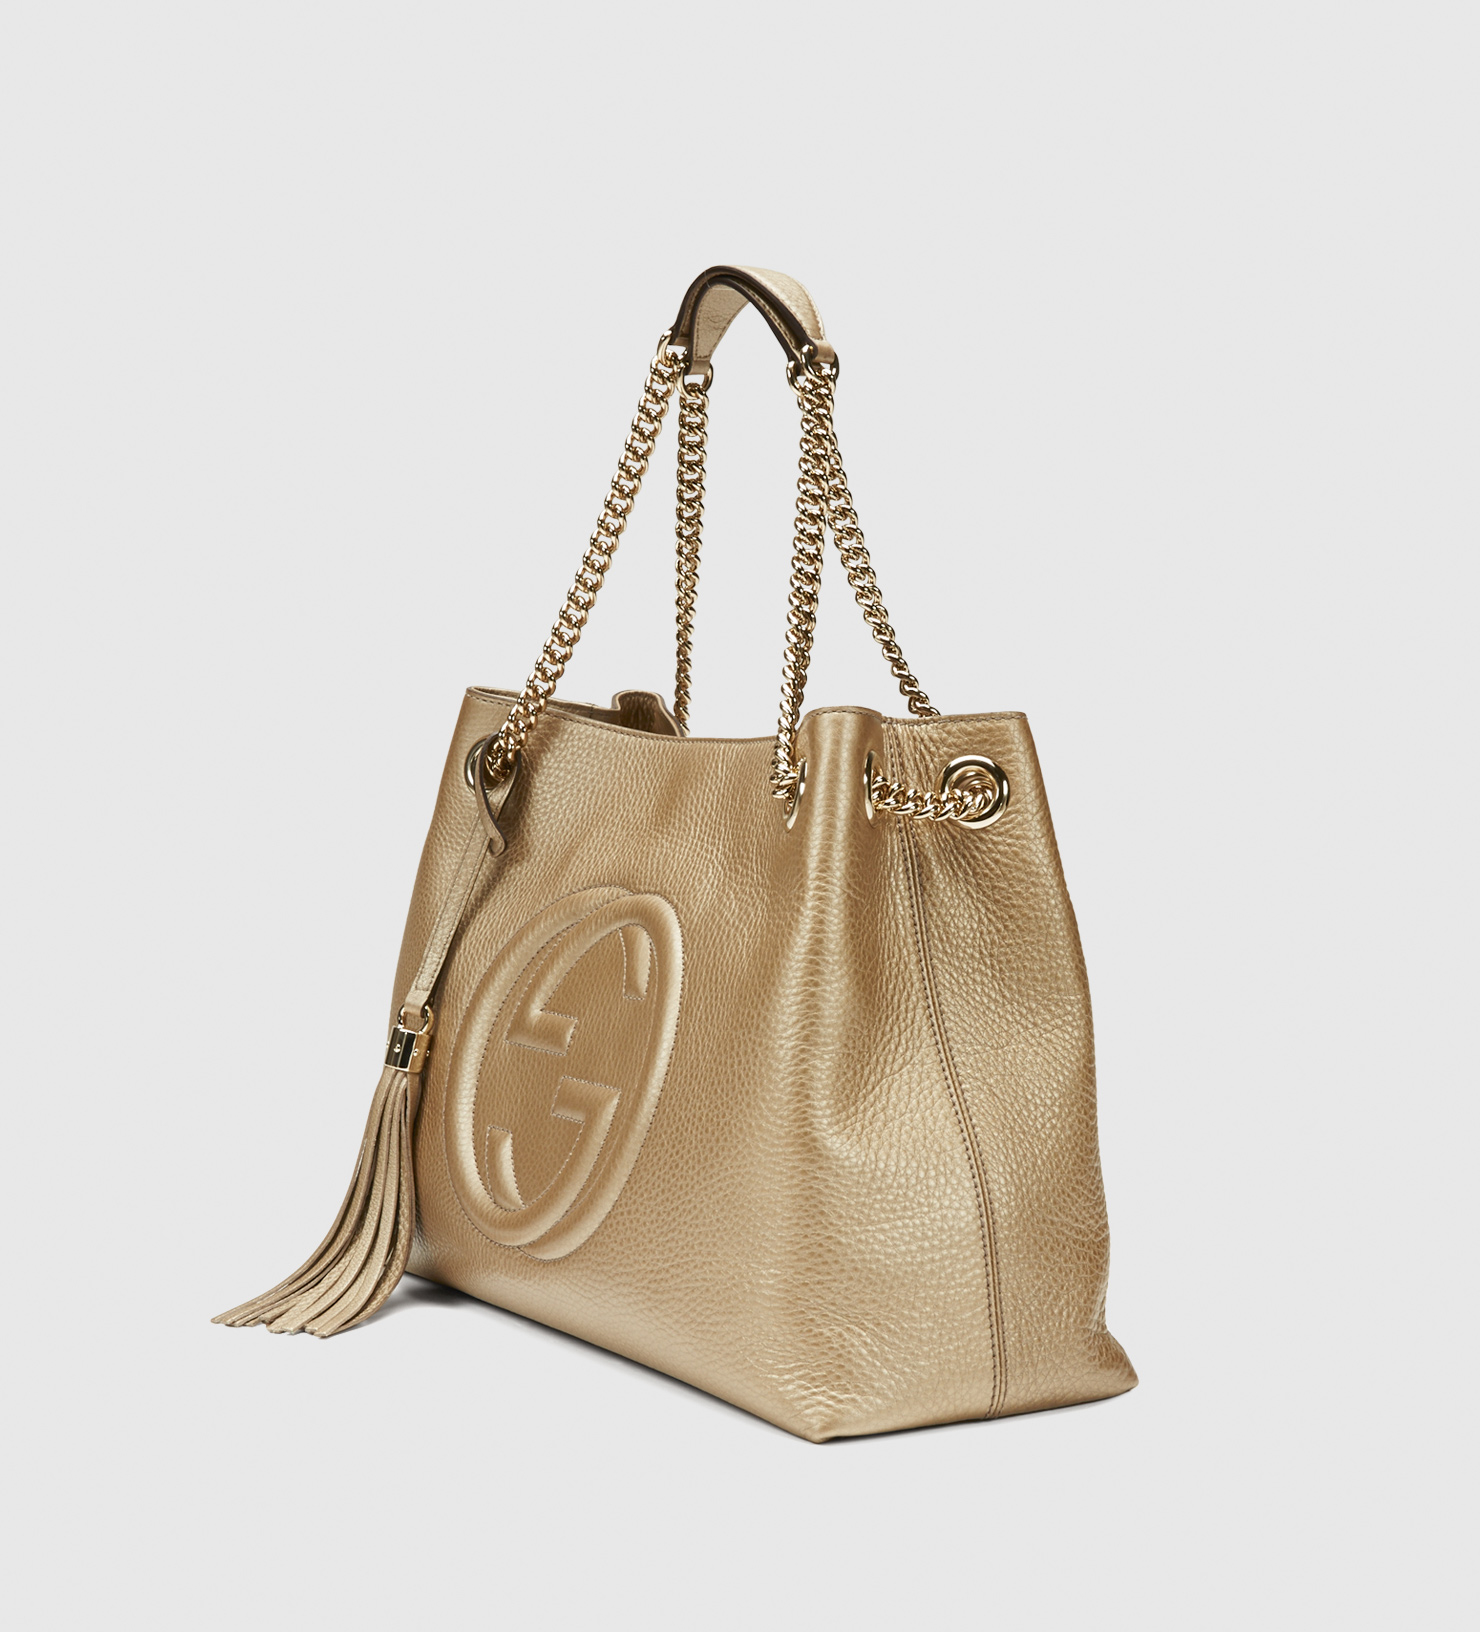 Gucci Soho Metallic Leather Shoulder Bag in Metallic | Lyst